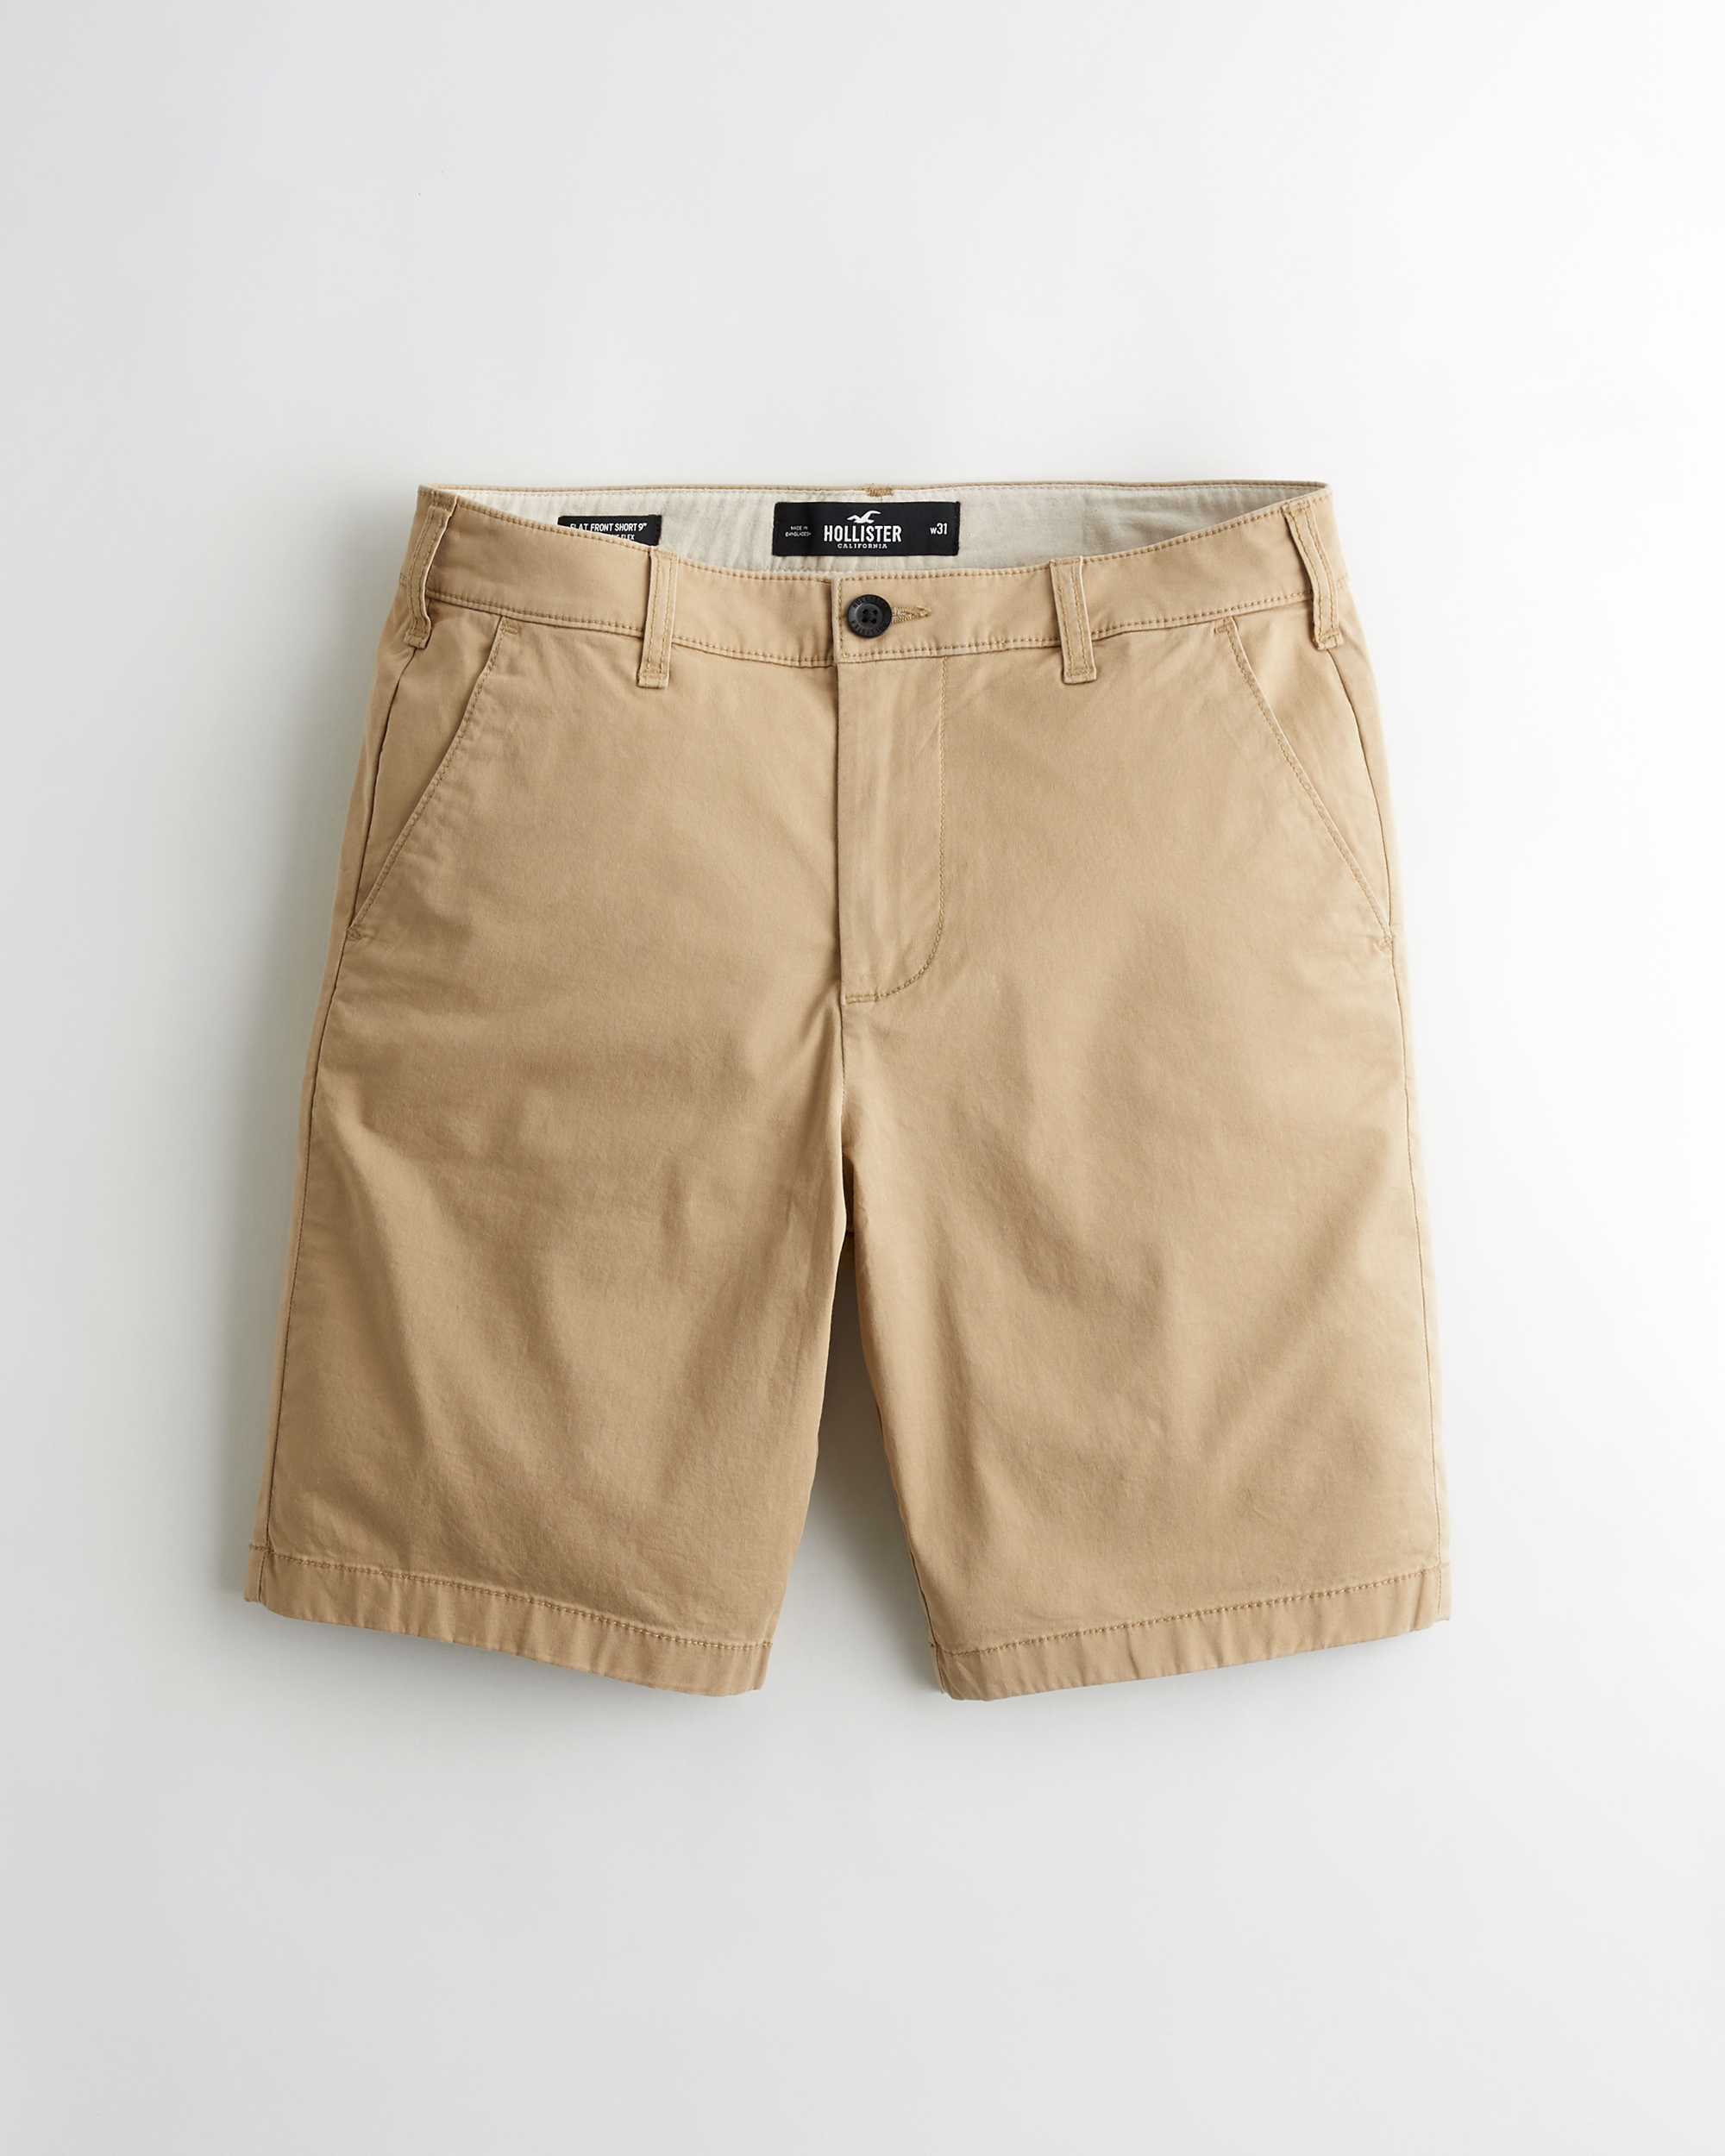 hollister bermuda shorts